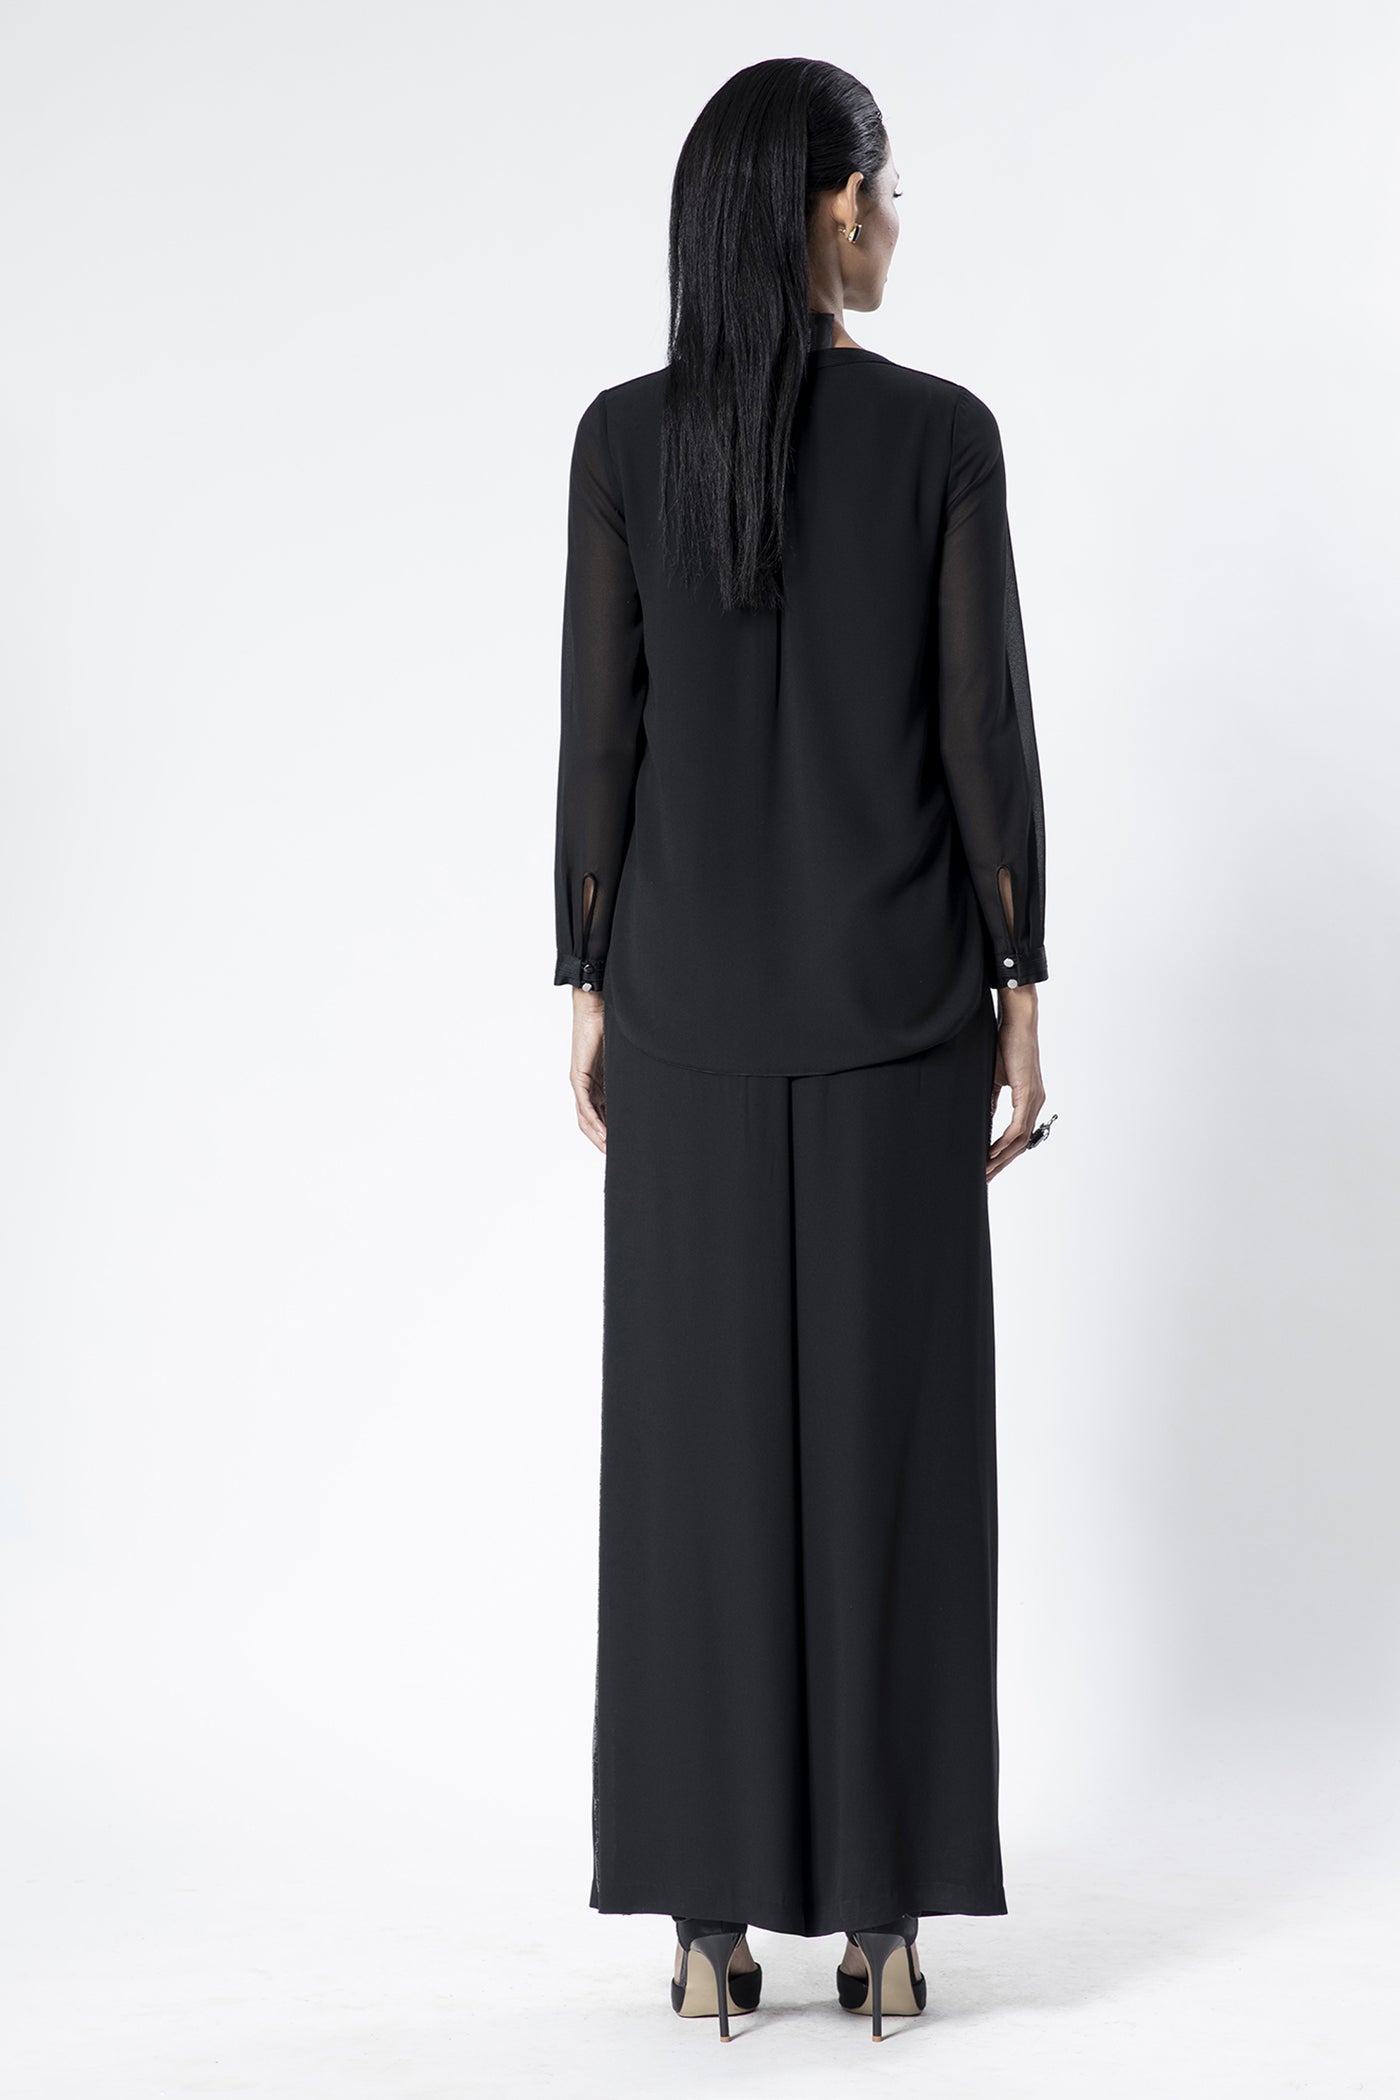 Rohit Gandhi and Rahul Khanna Black Embellished Sleeve Top indian designer wear online shopping melange singapore